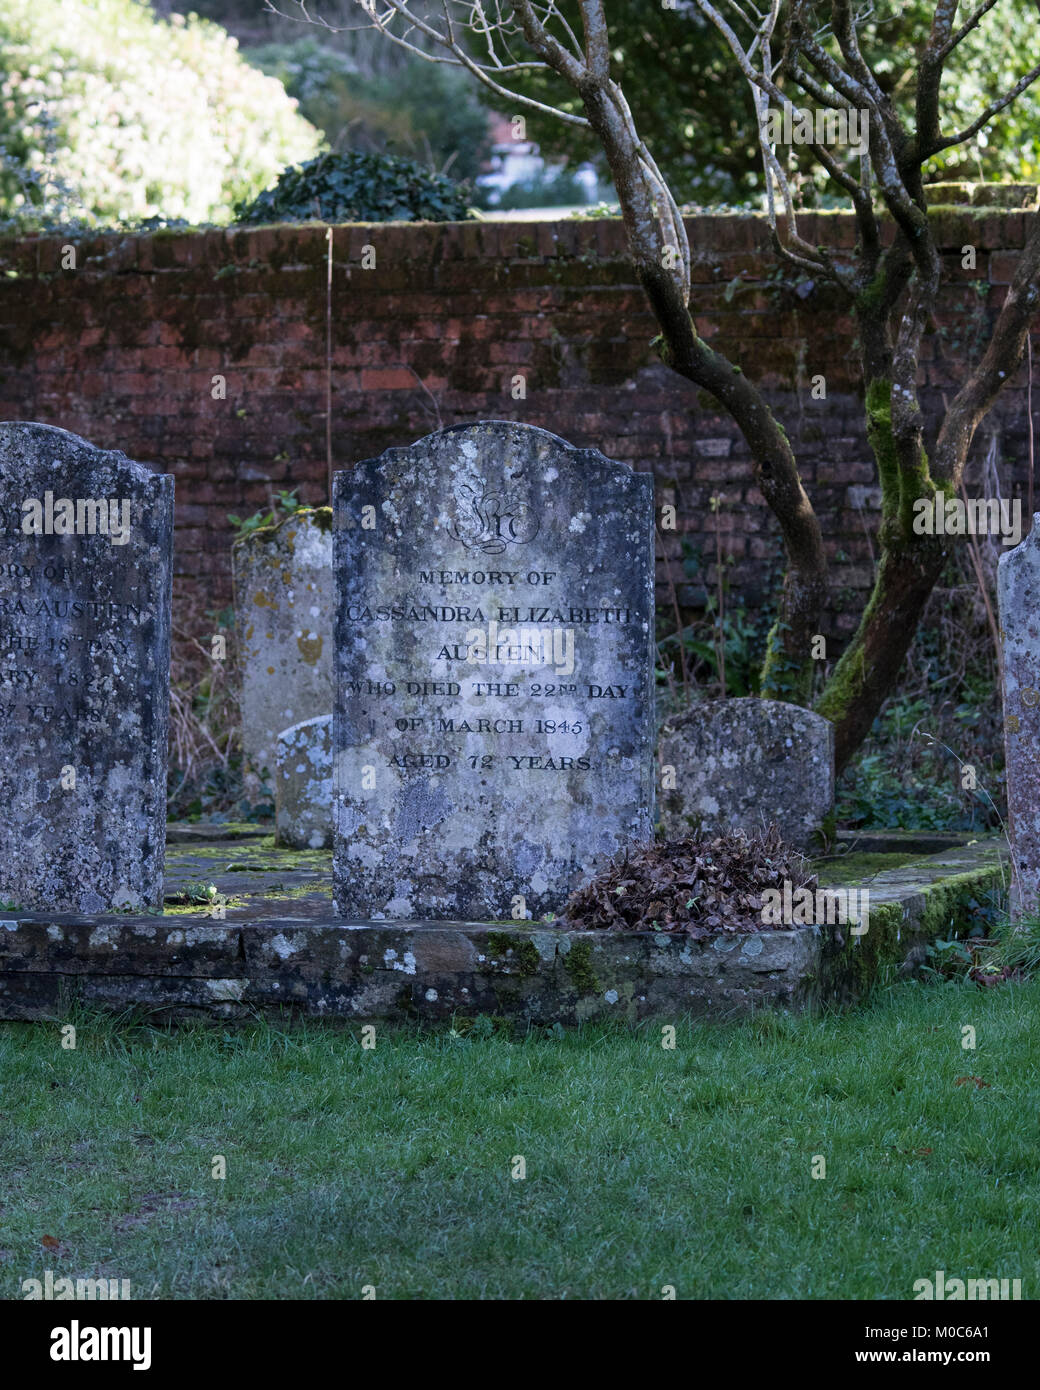 The grave of Cassandra Elizabeth Austen (elder sister of Jane Austen)Chawton churchyard, Hampshire Stock Photo